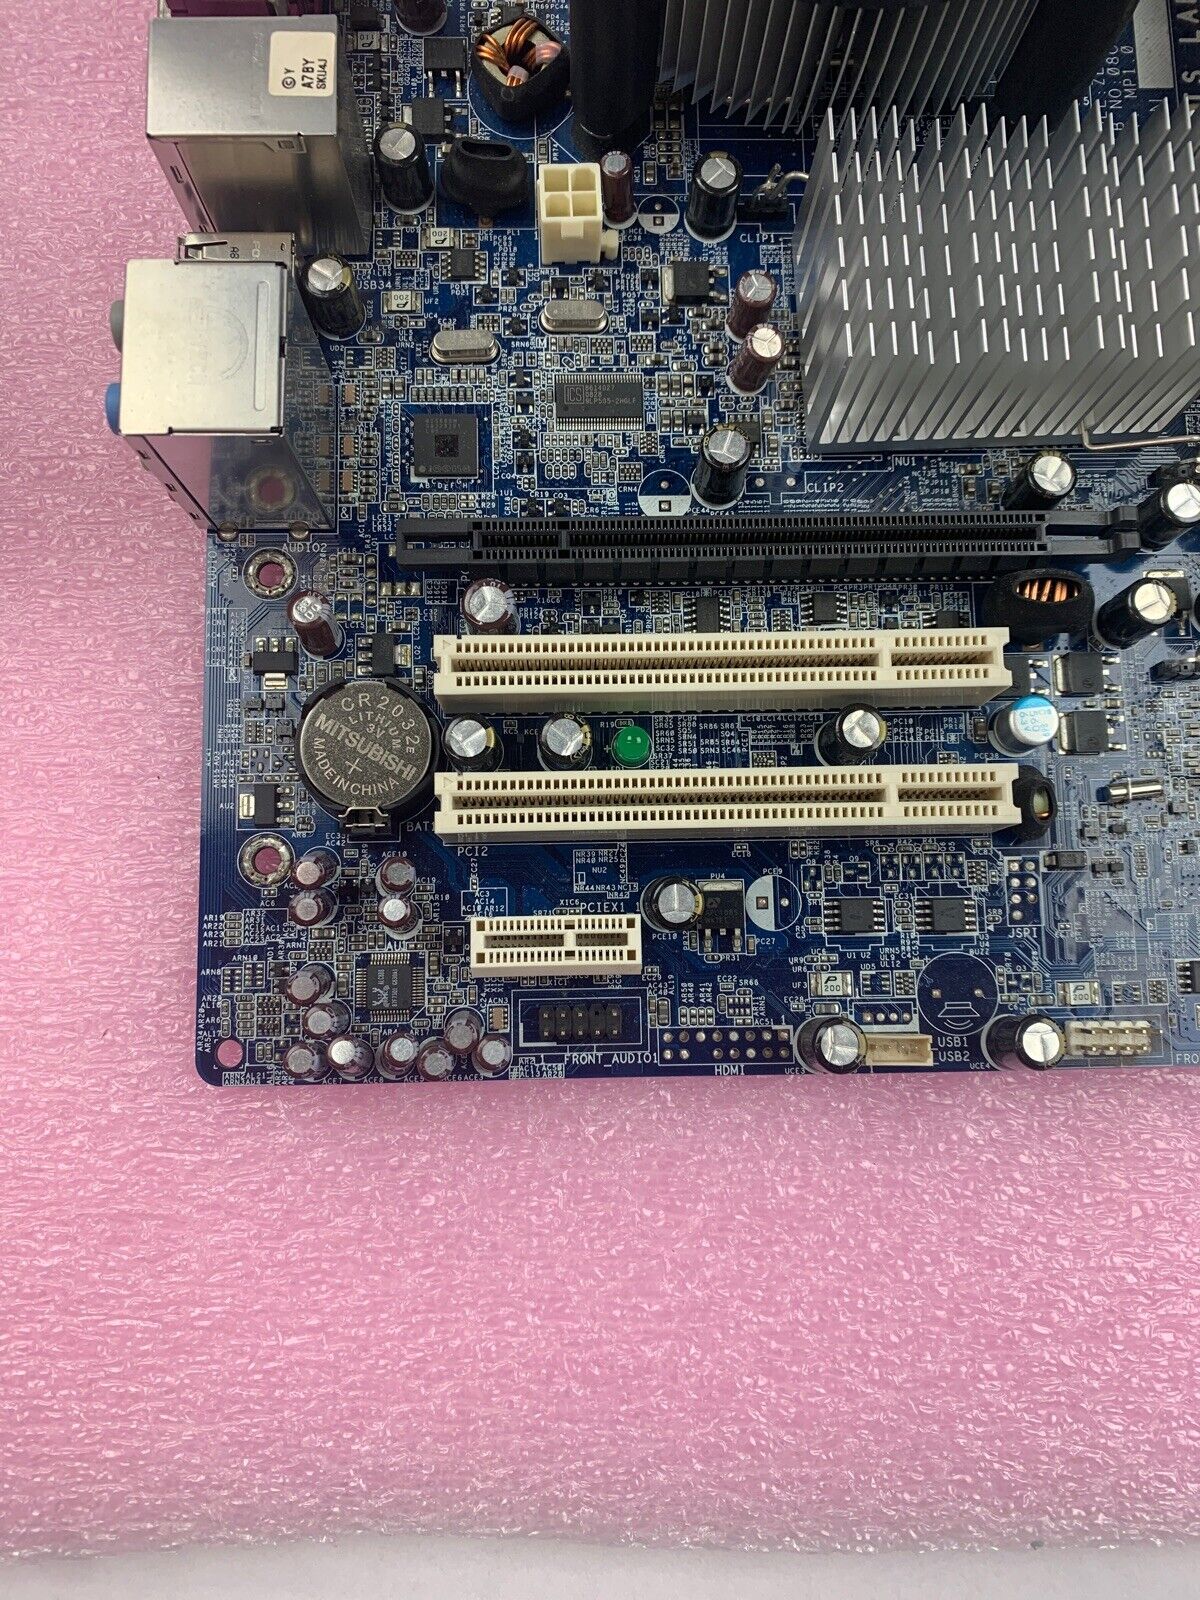 Samsung ZEUS-60 Motherboard Intel Core2Duo E6550 2.3GHz CPU 4GB RAM IOS HS